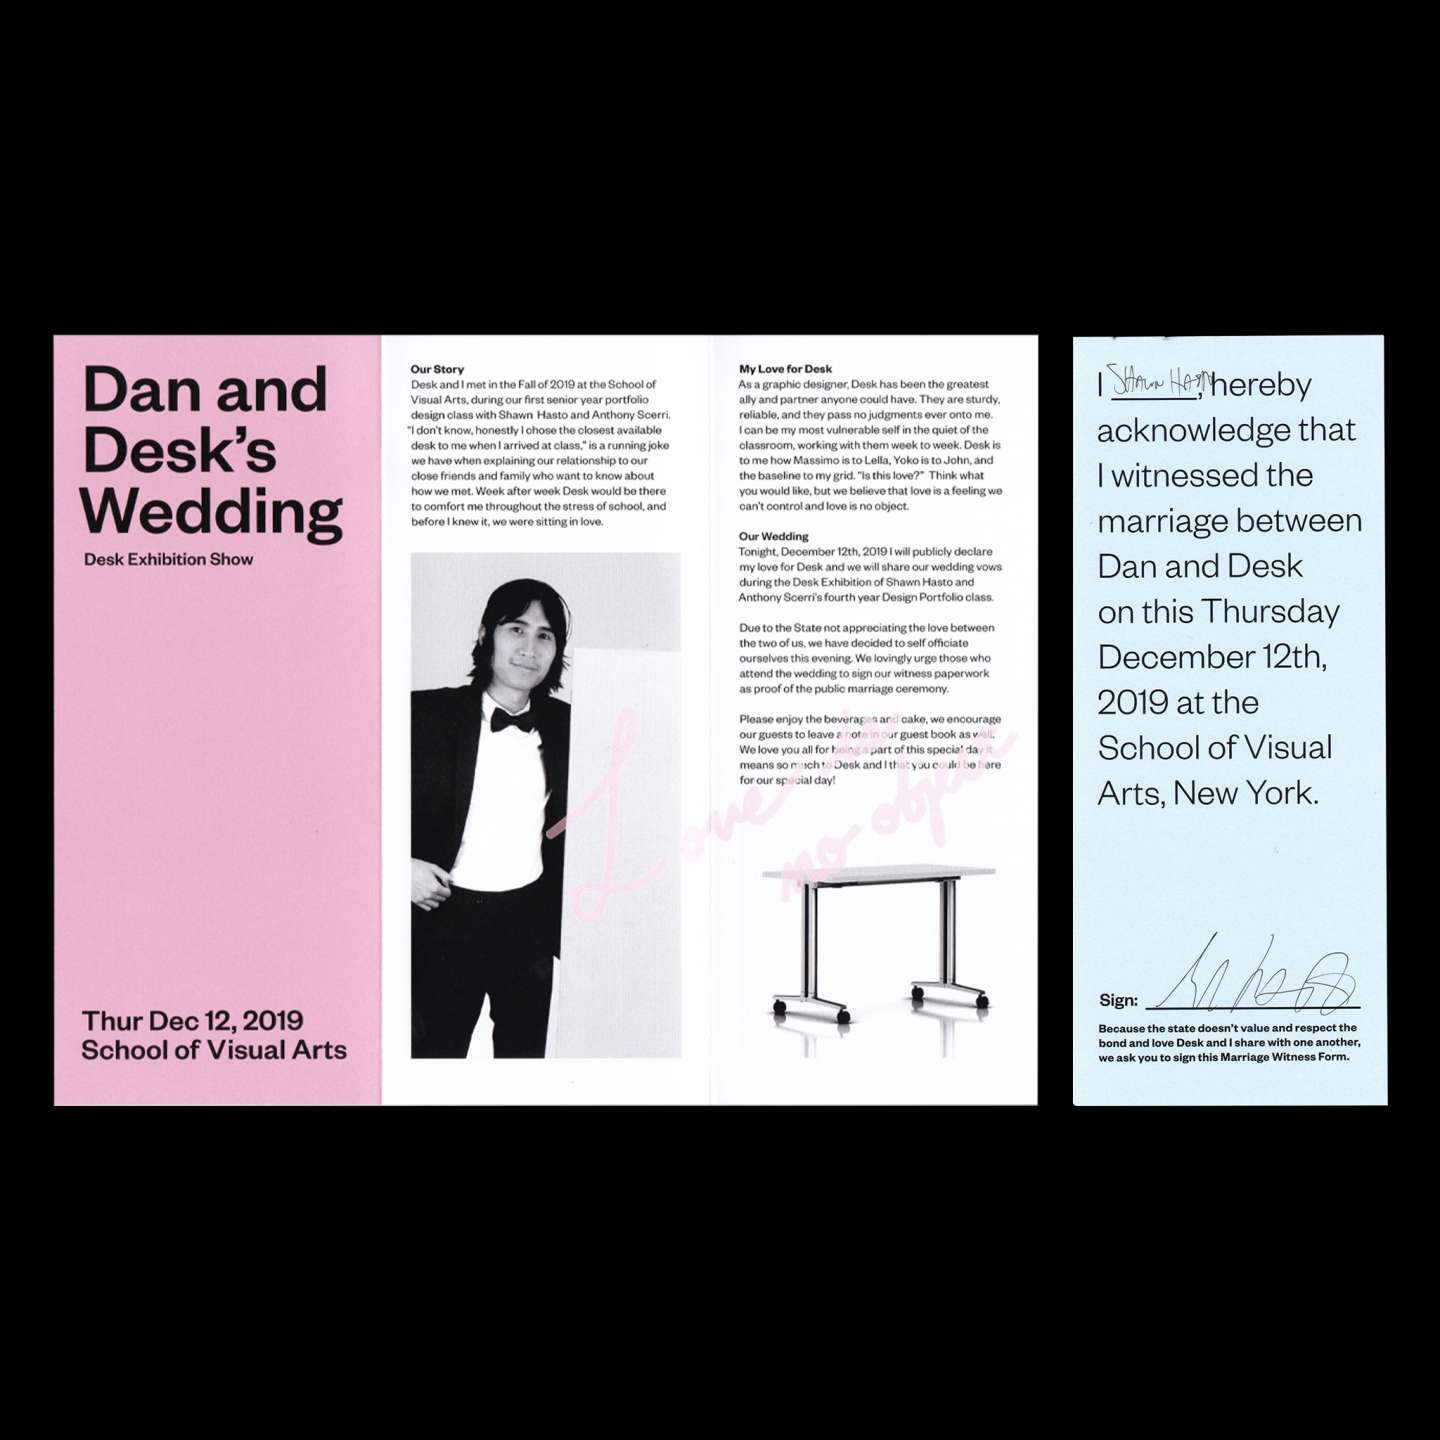 Dan and Desk's Wedding